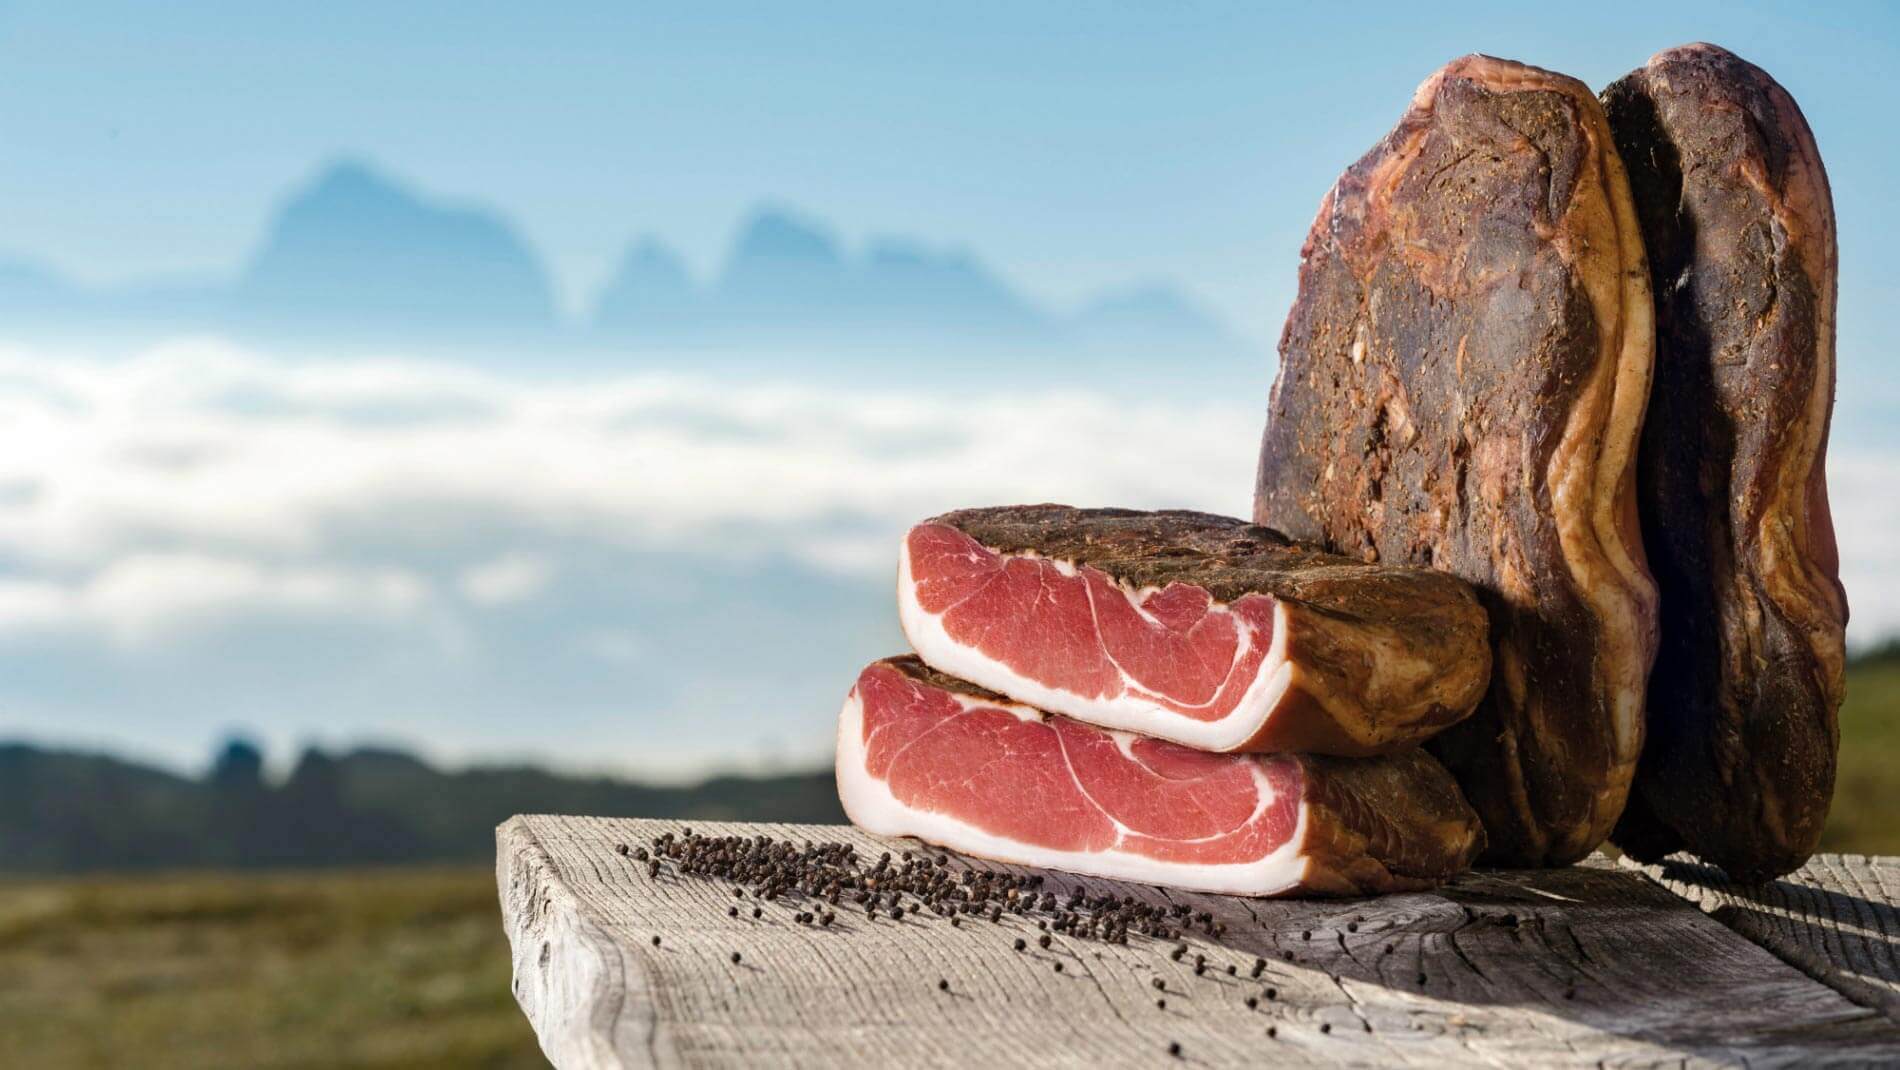 Speck Alto Adige PGI – Original South Tyrolean Speck / Bacon